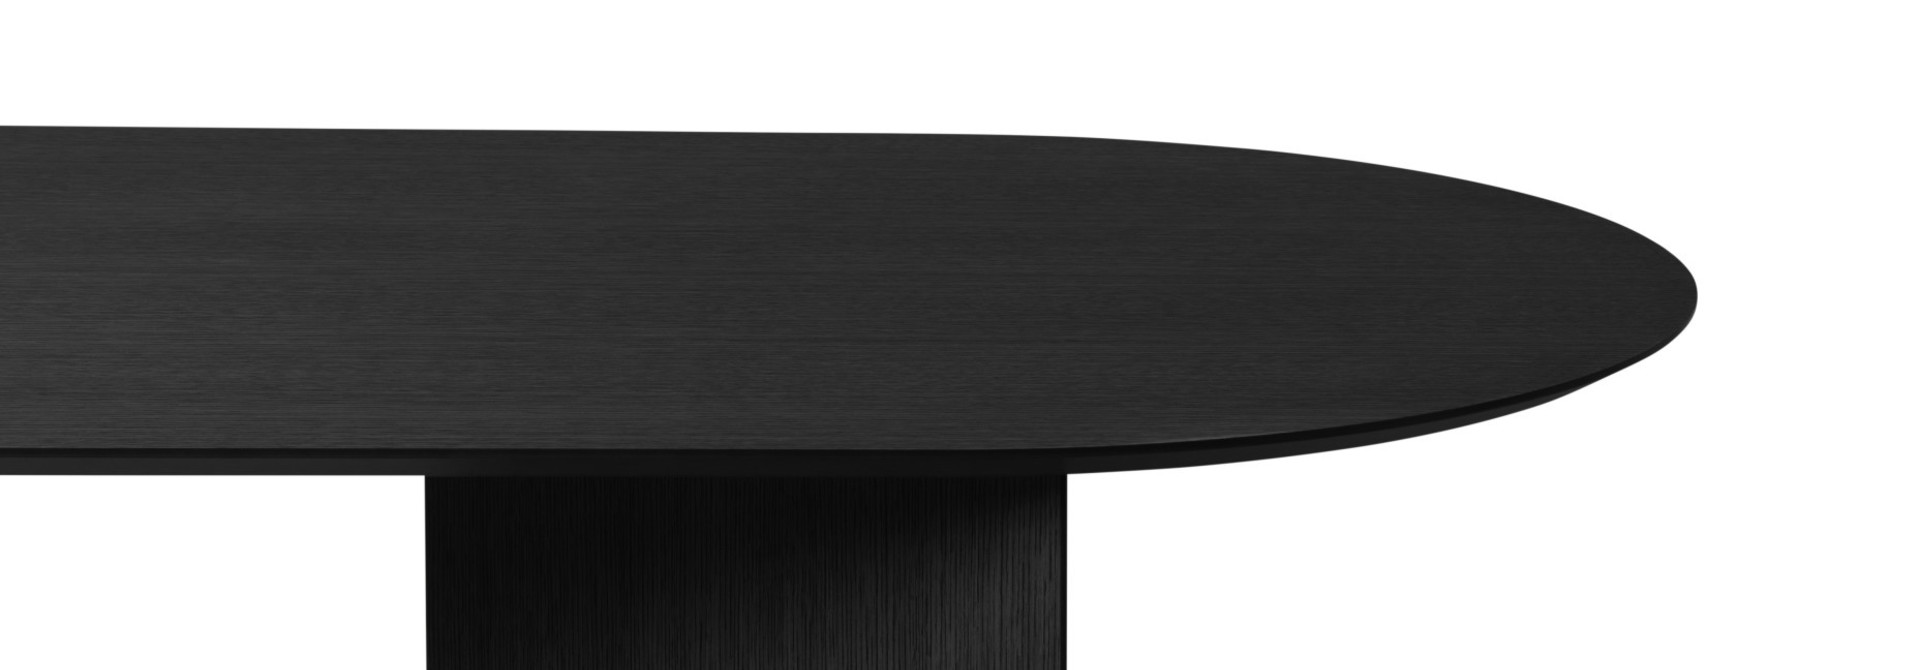 Mingle Table Top Oval - 220 cm